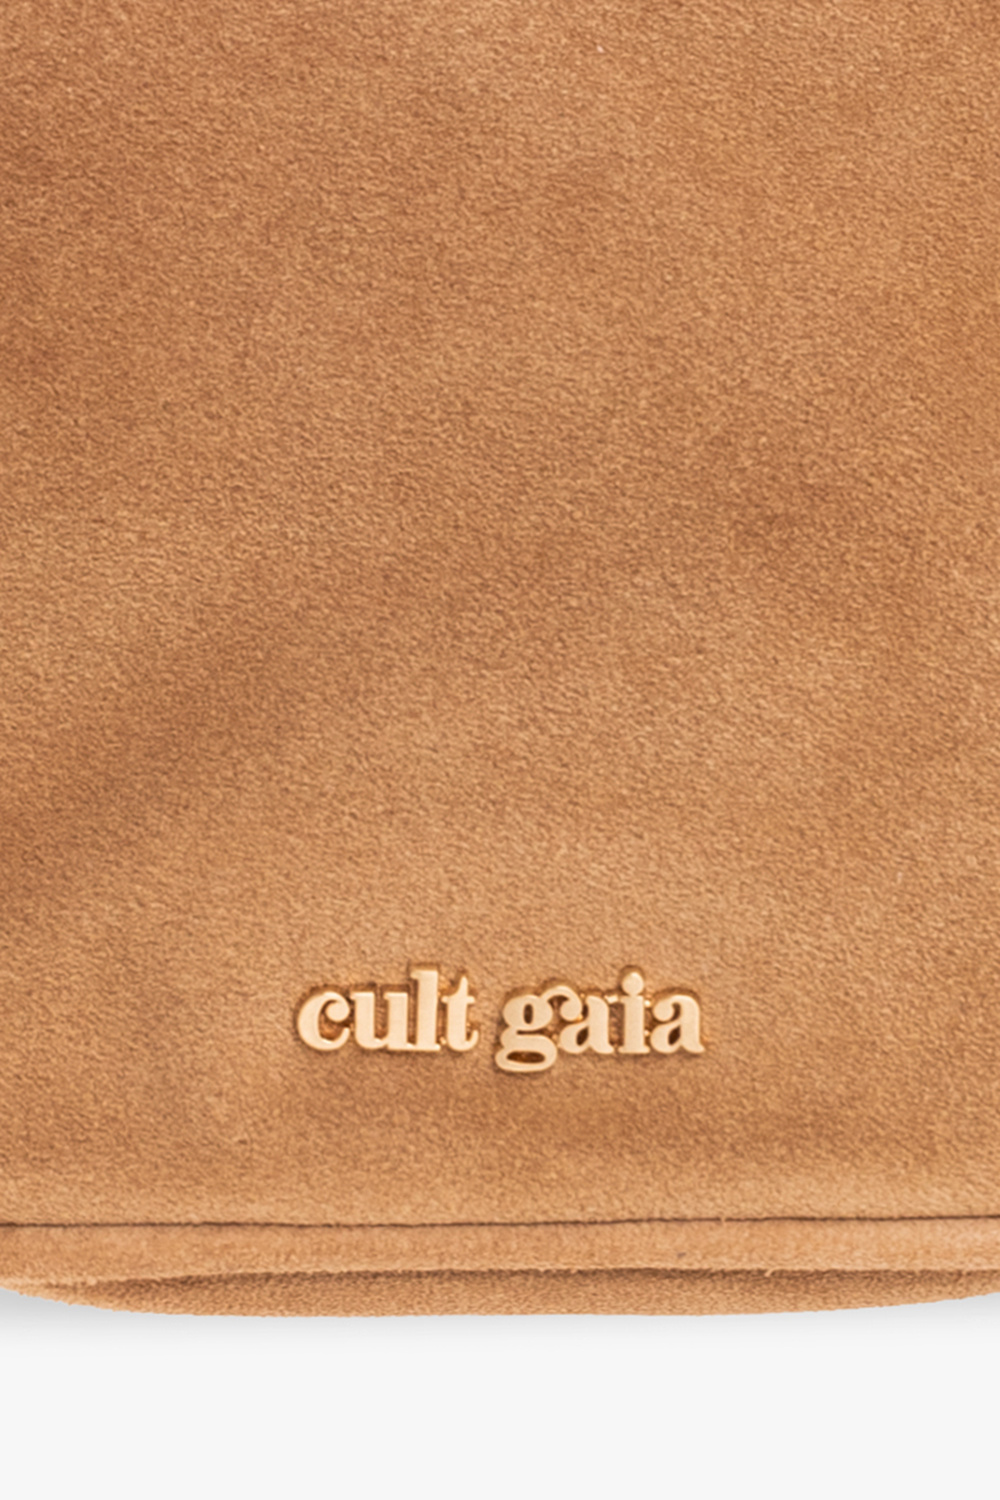 Cult Gaia ‘Gia’ hobo shoulder bag